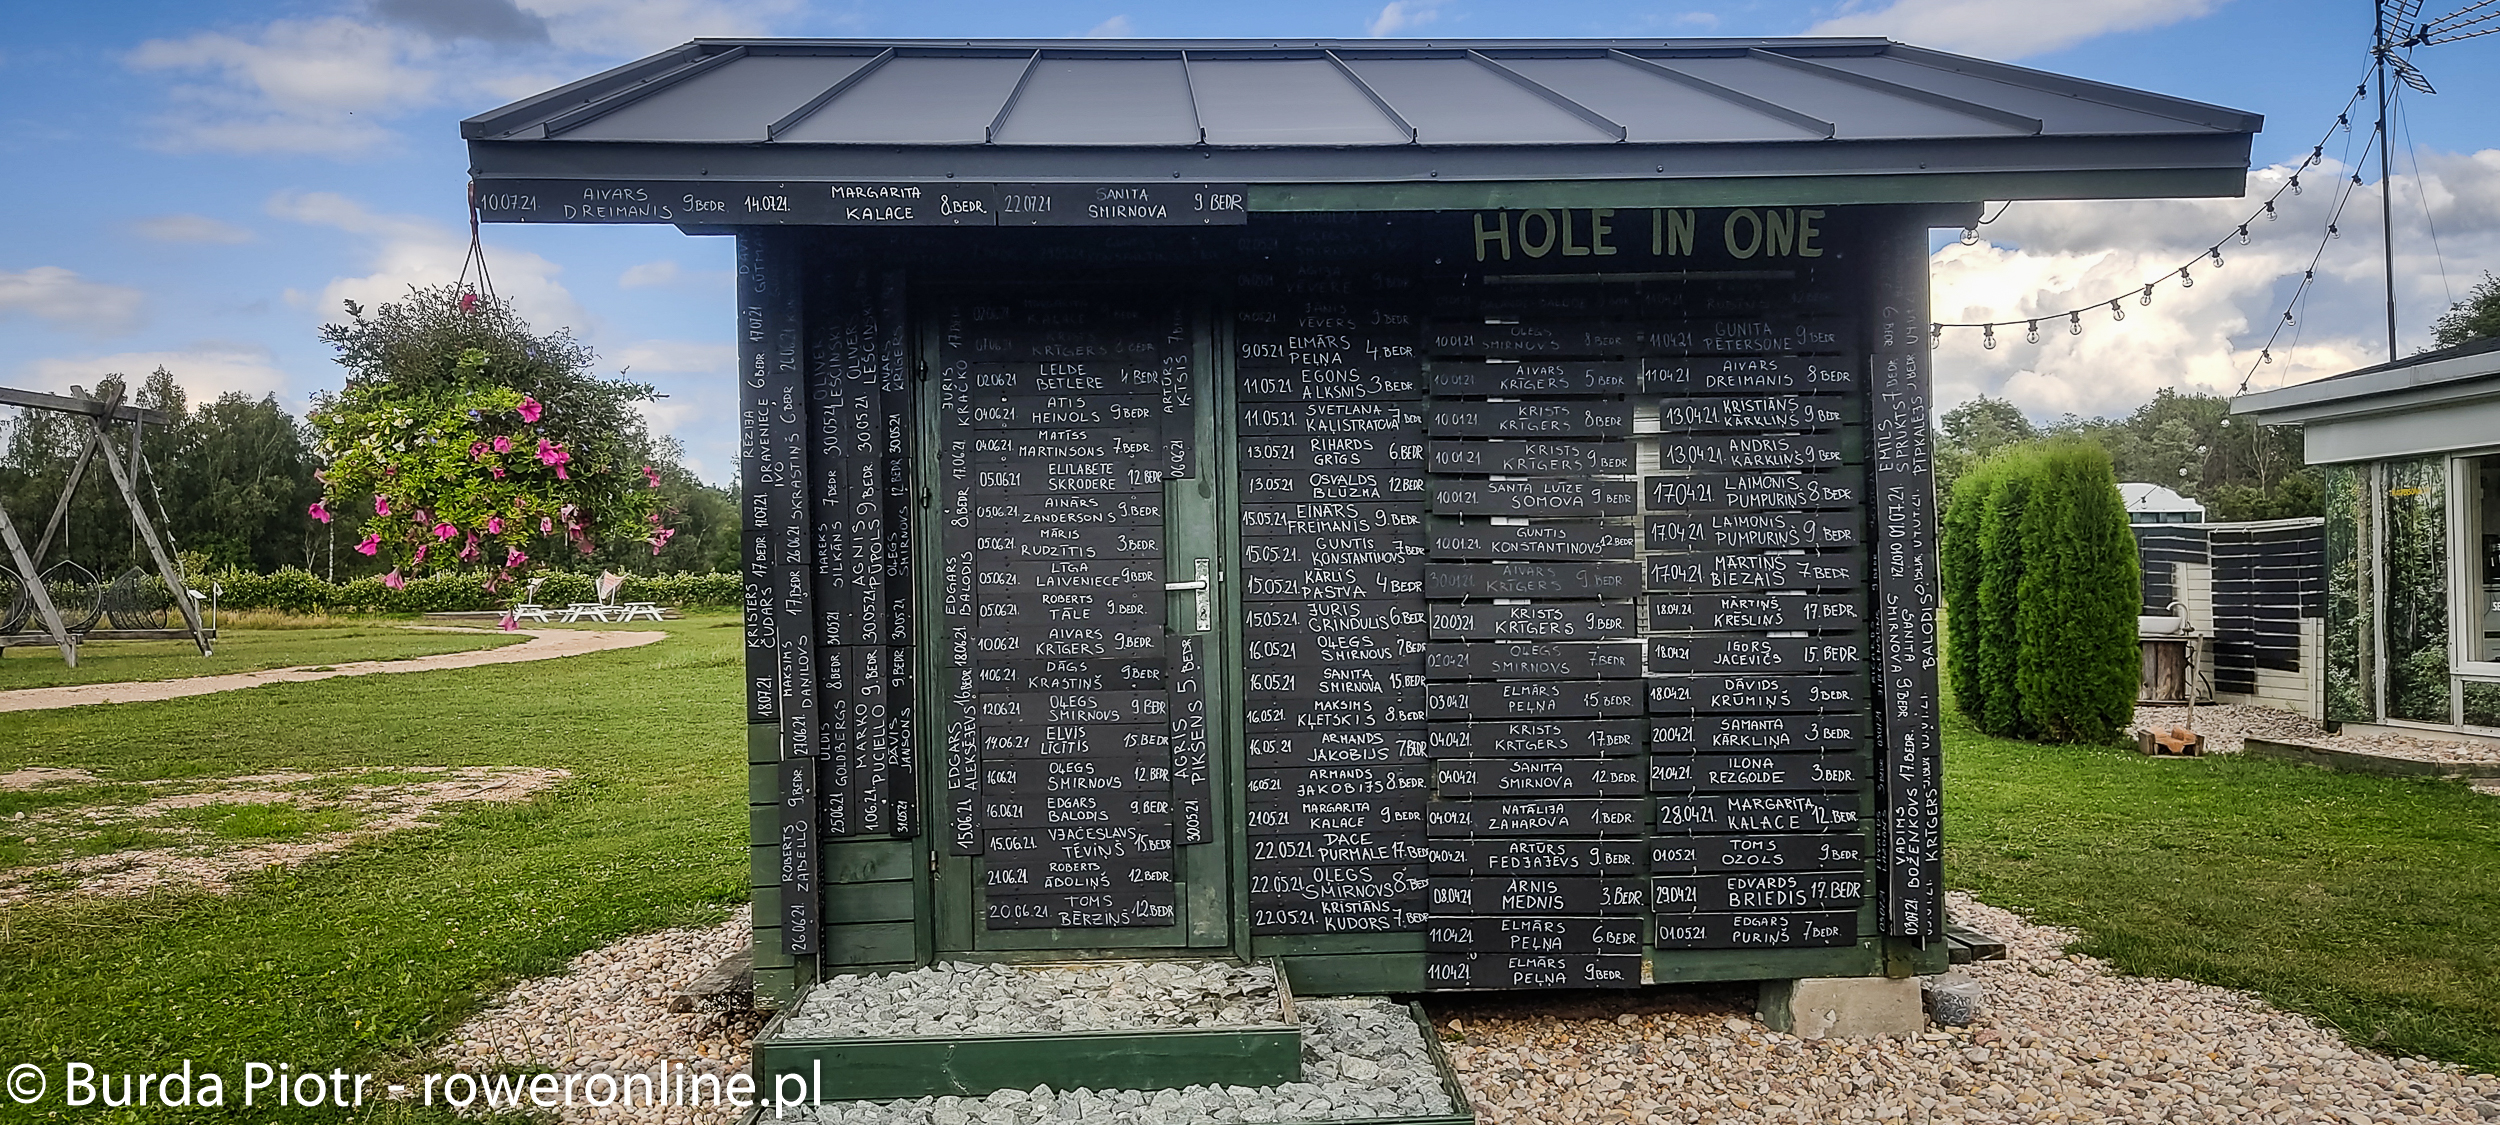 Ściana sław na polu Football Golf (fot. P. Burda)